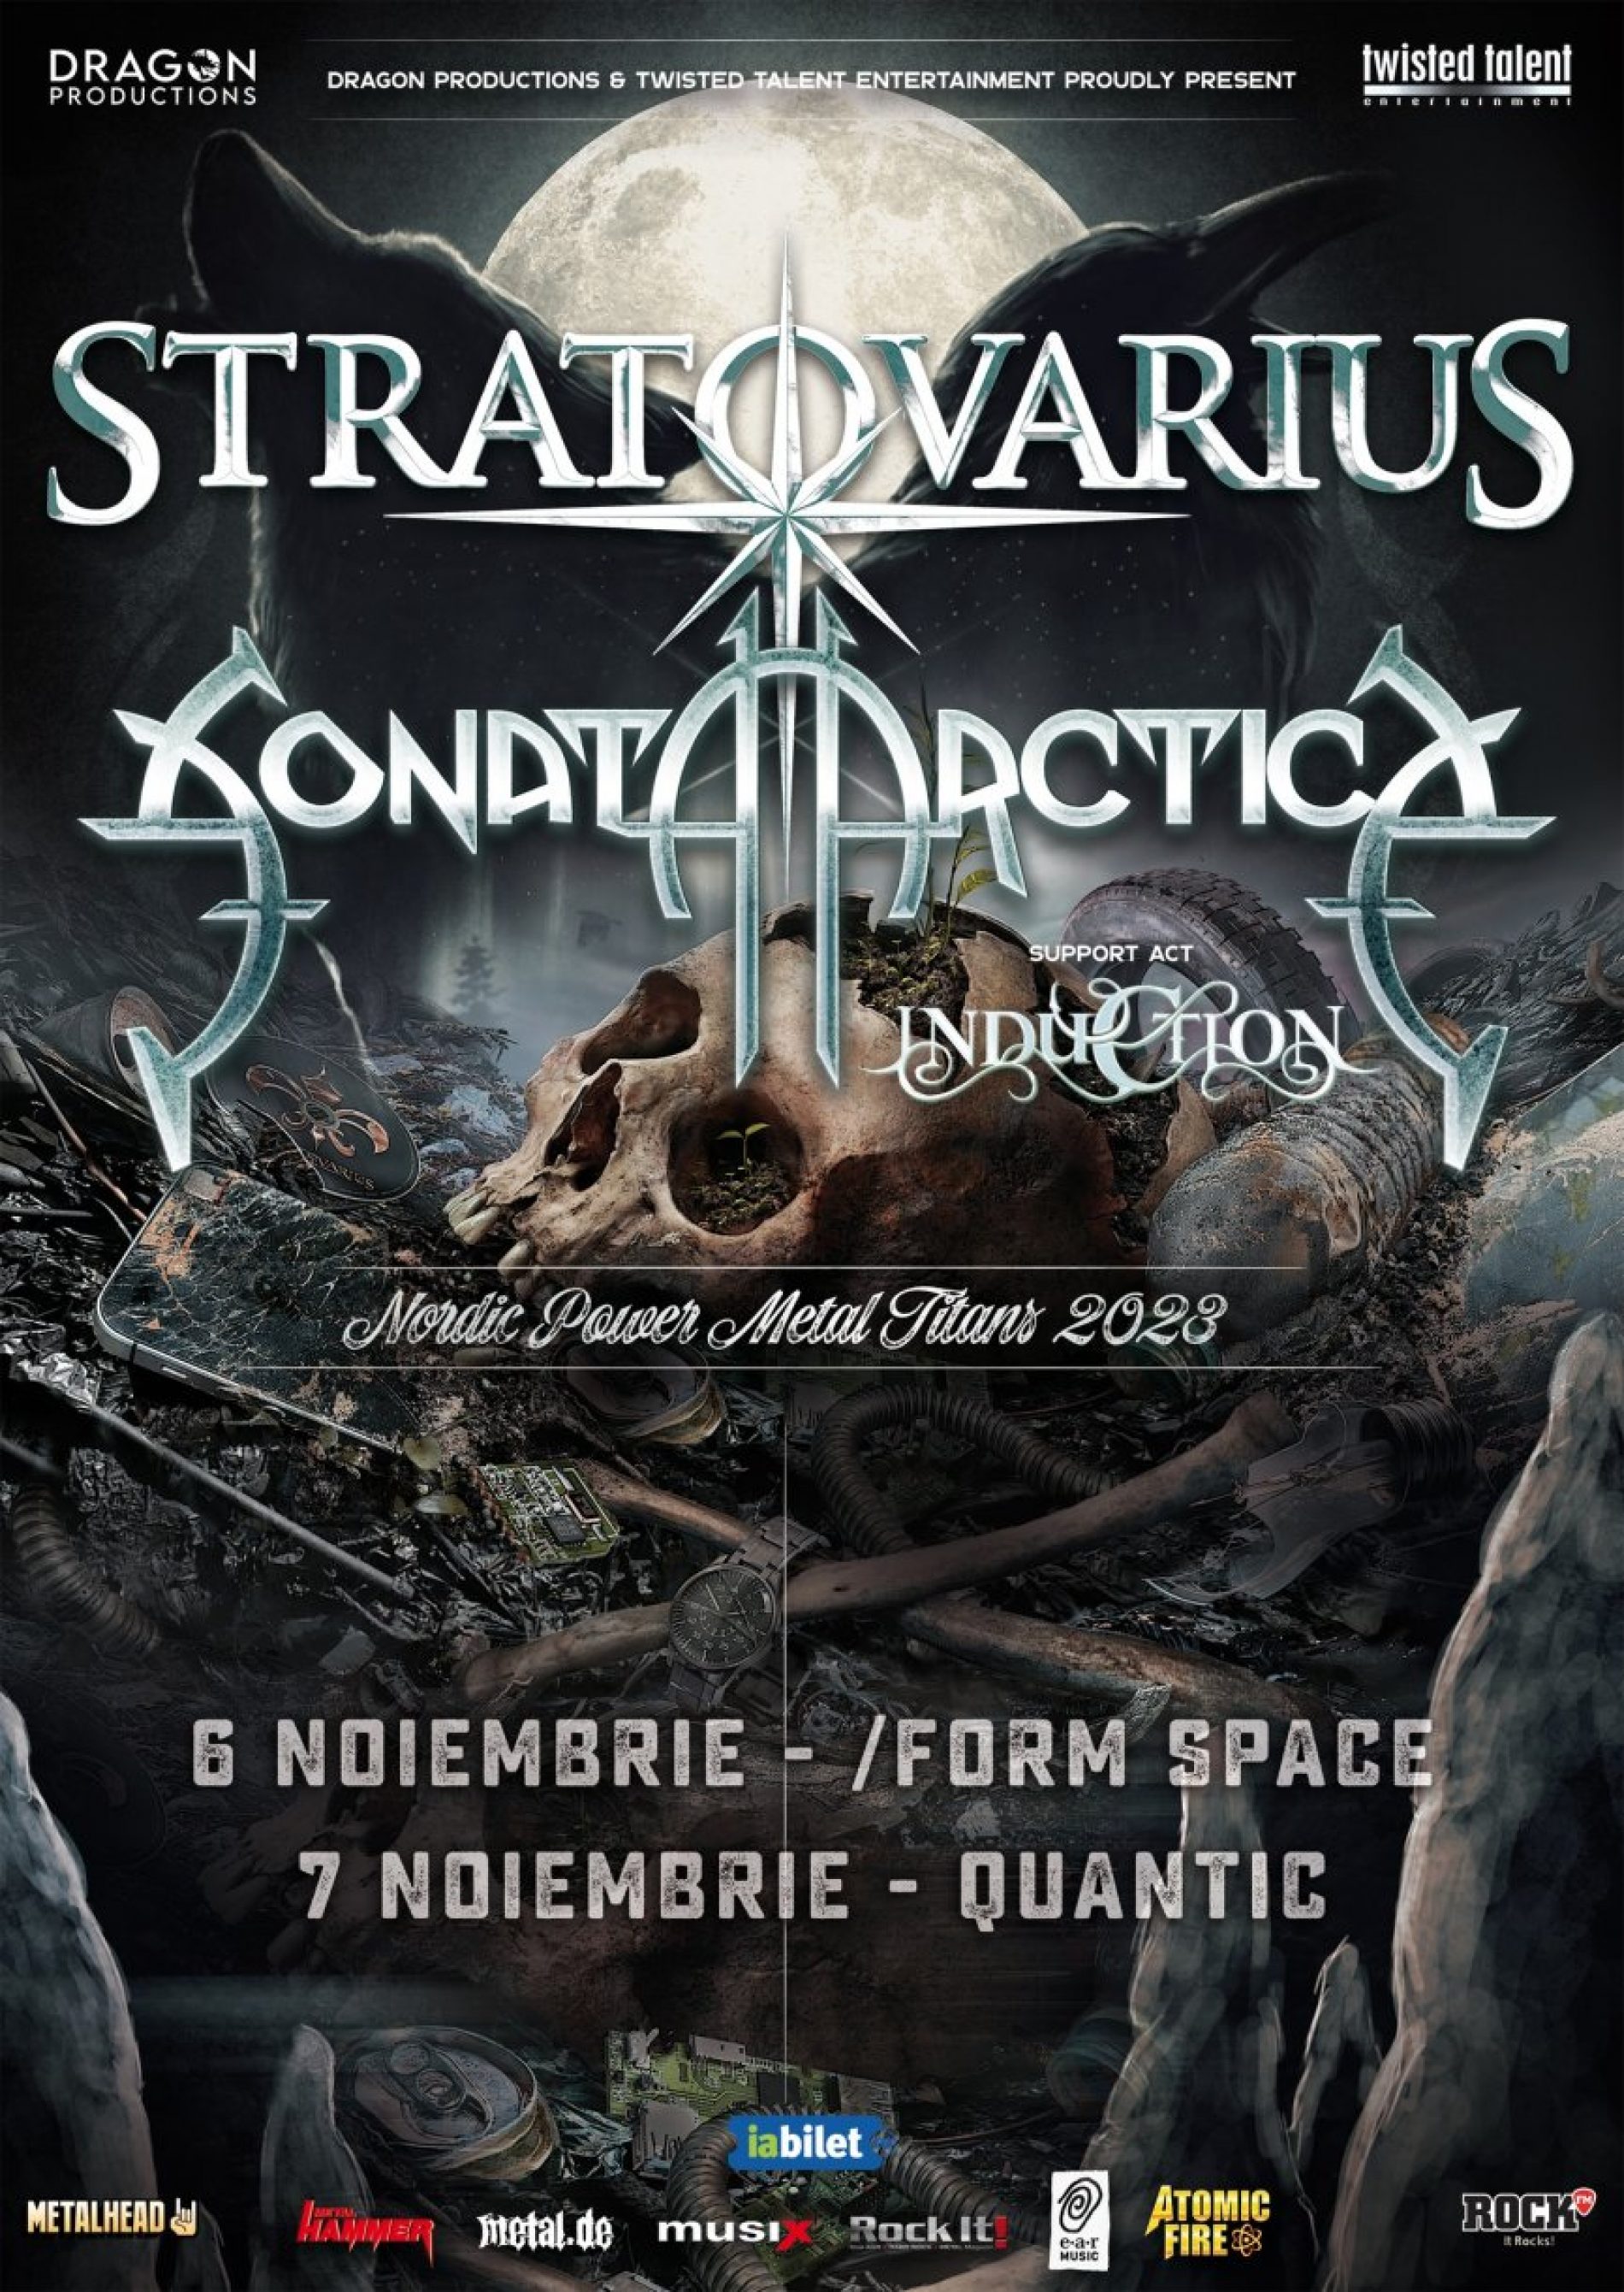 Stratovarius și Sonata Arctica vor susține 2 concerte în România